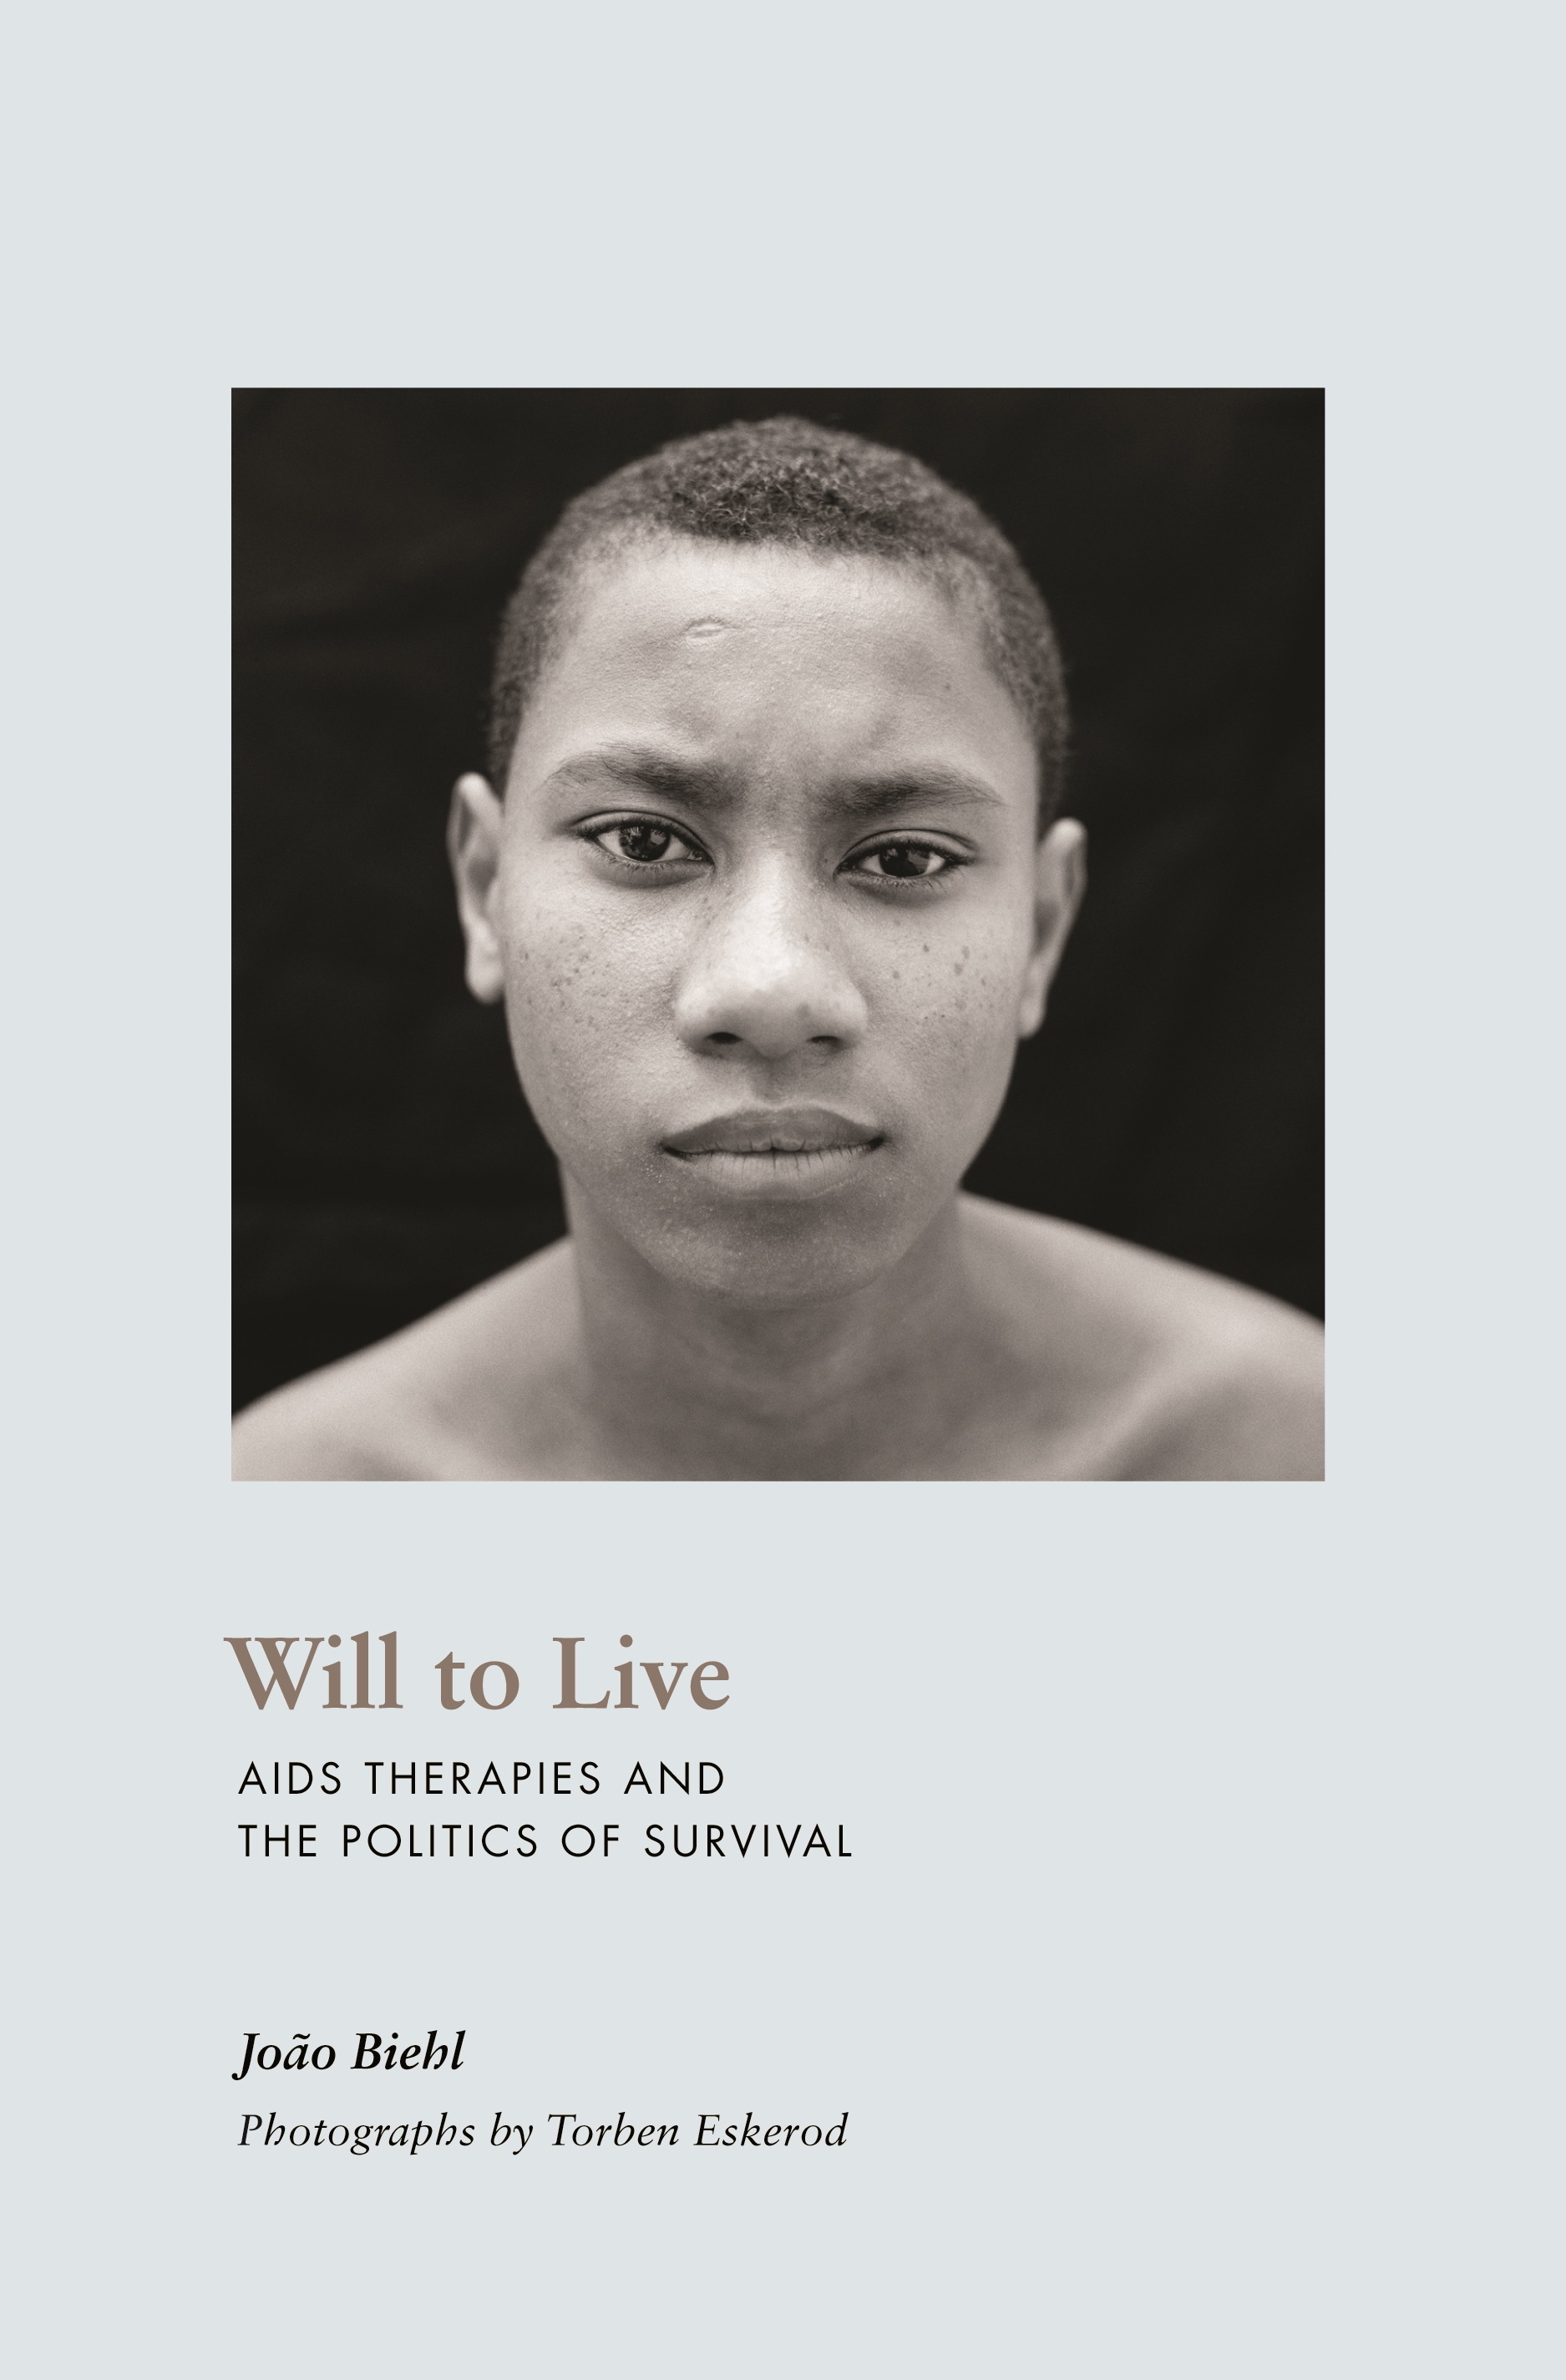 The Politics of Survival  Columbia University Press